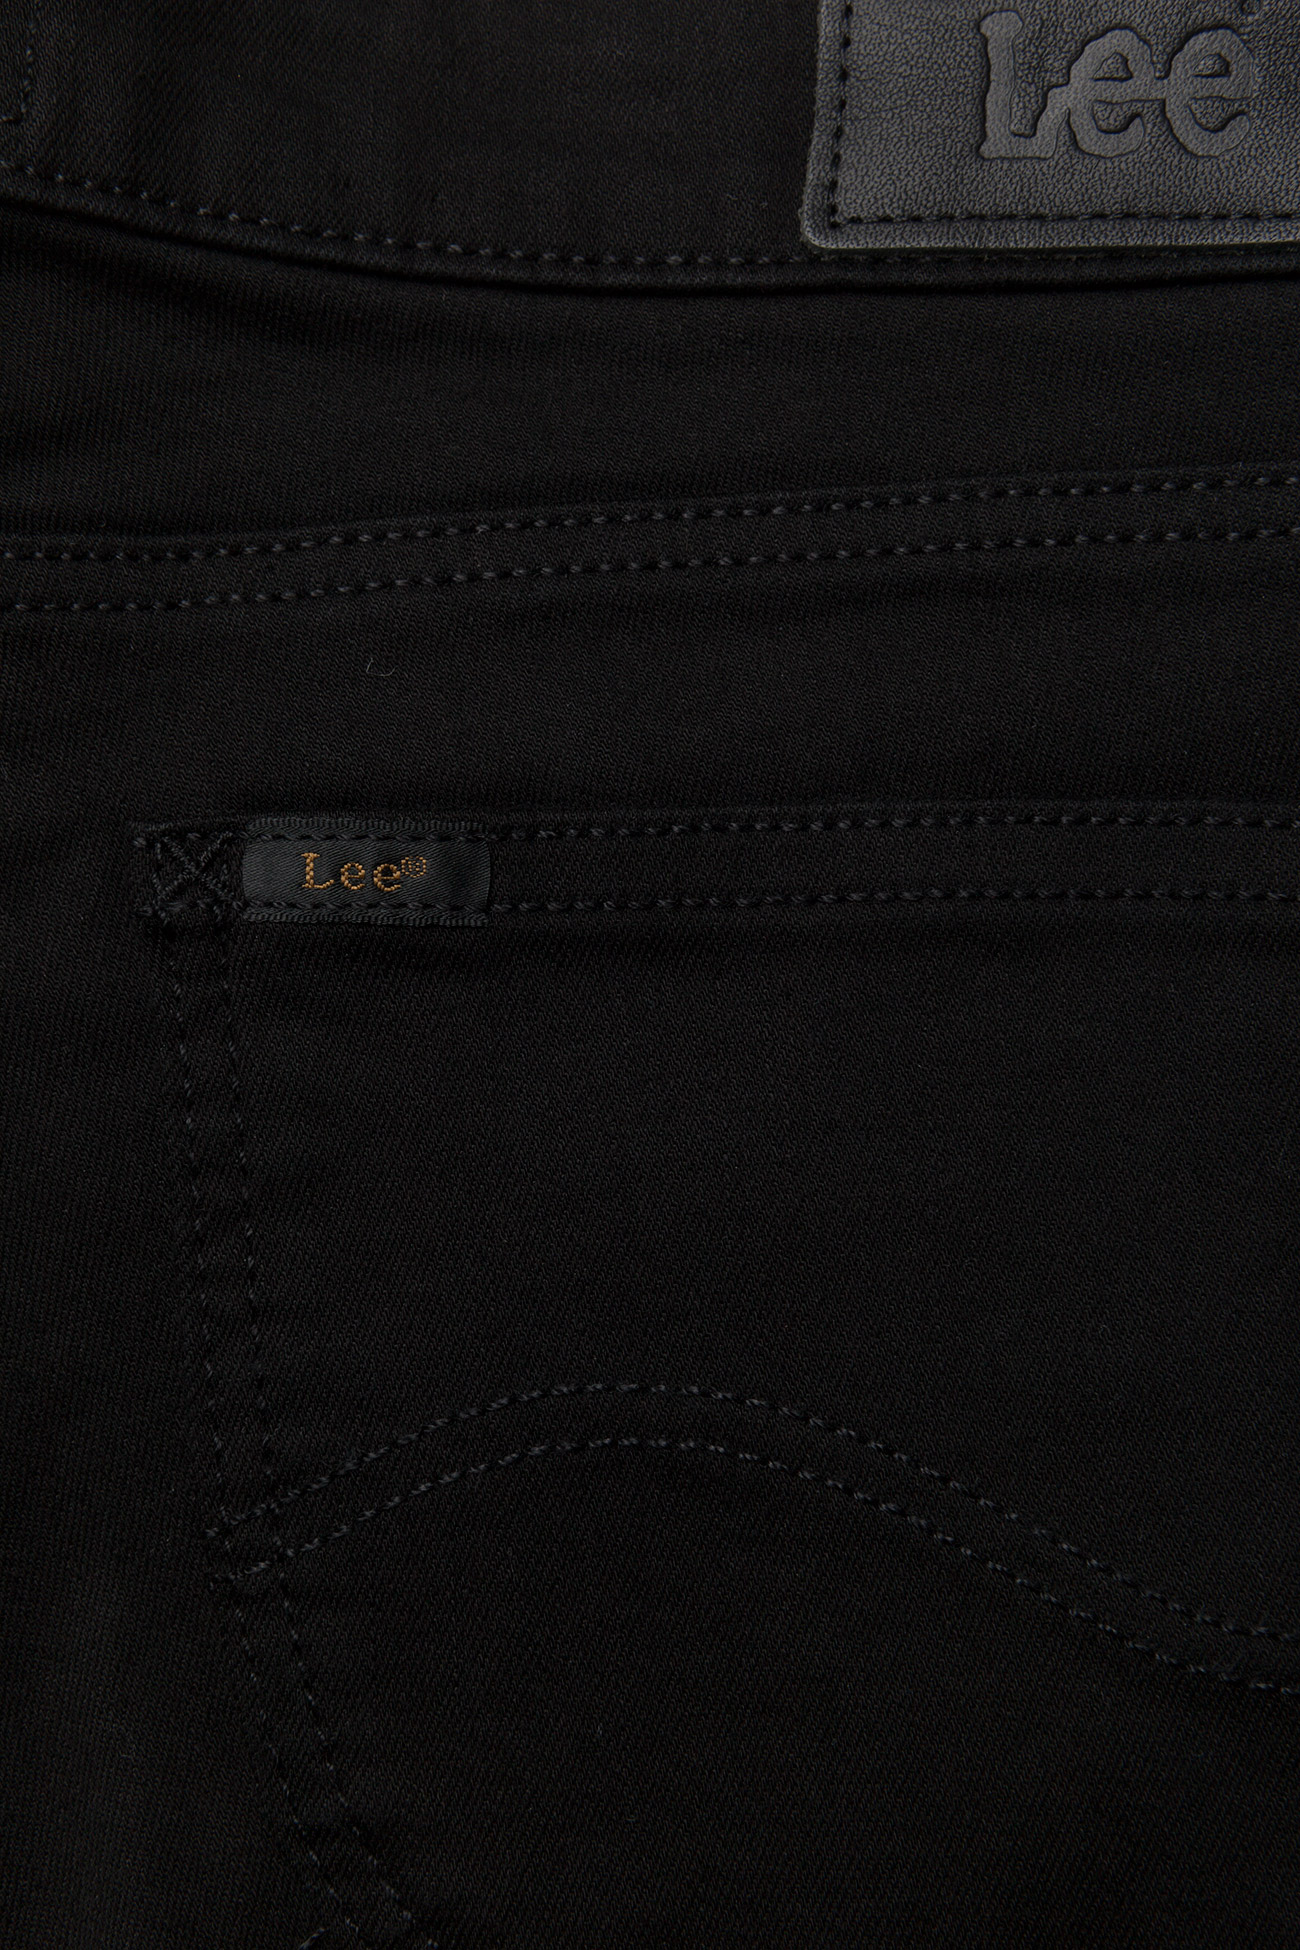 Lee Jeans - SCARLETT - skinny jeans - black rinse - 1